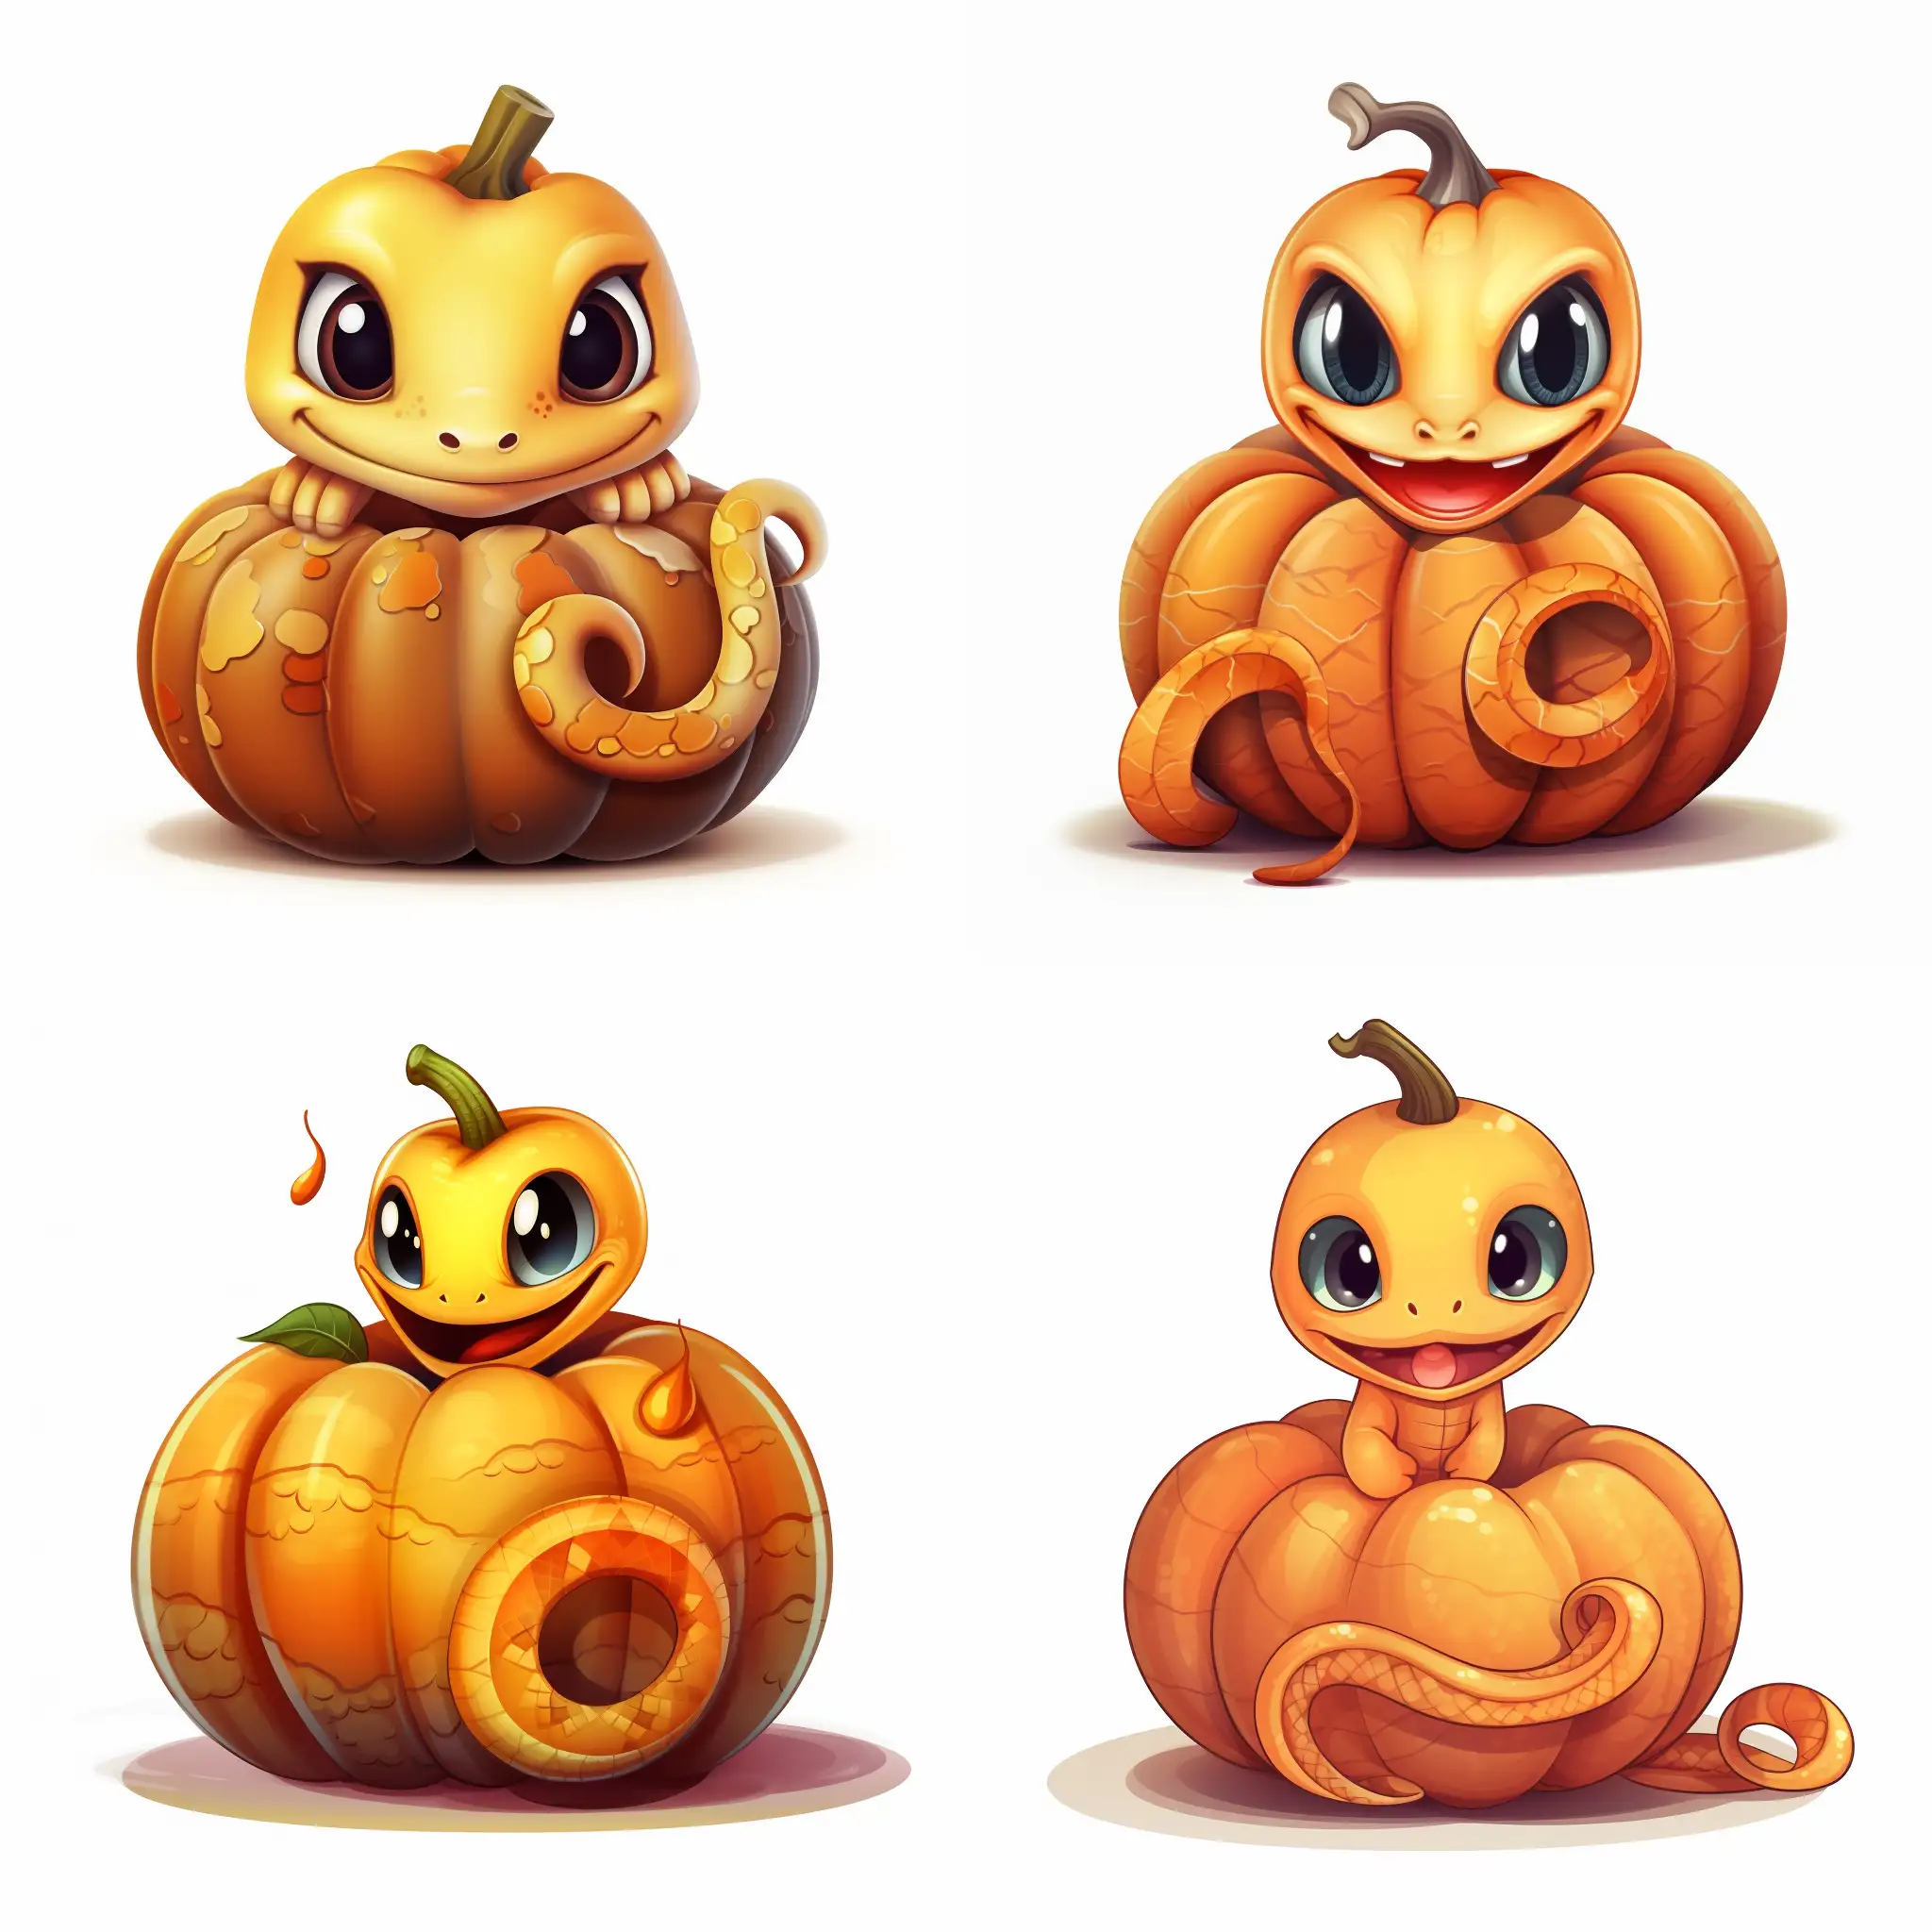 Adorable-Cartoon-Baby-Snake-Inside-Pumpkin